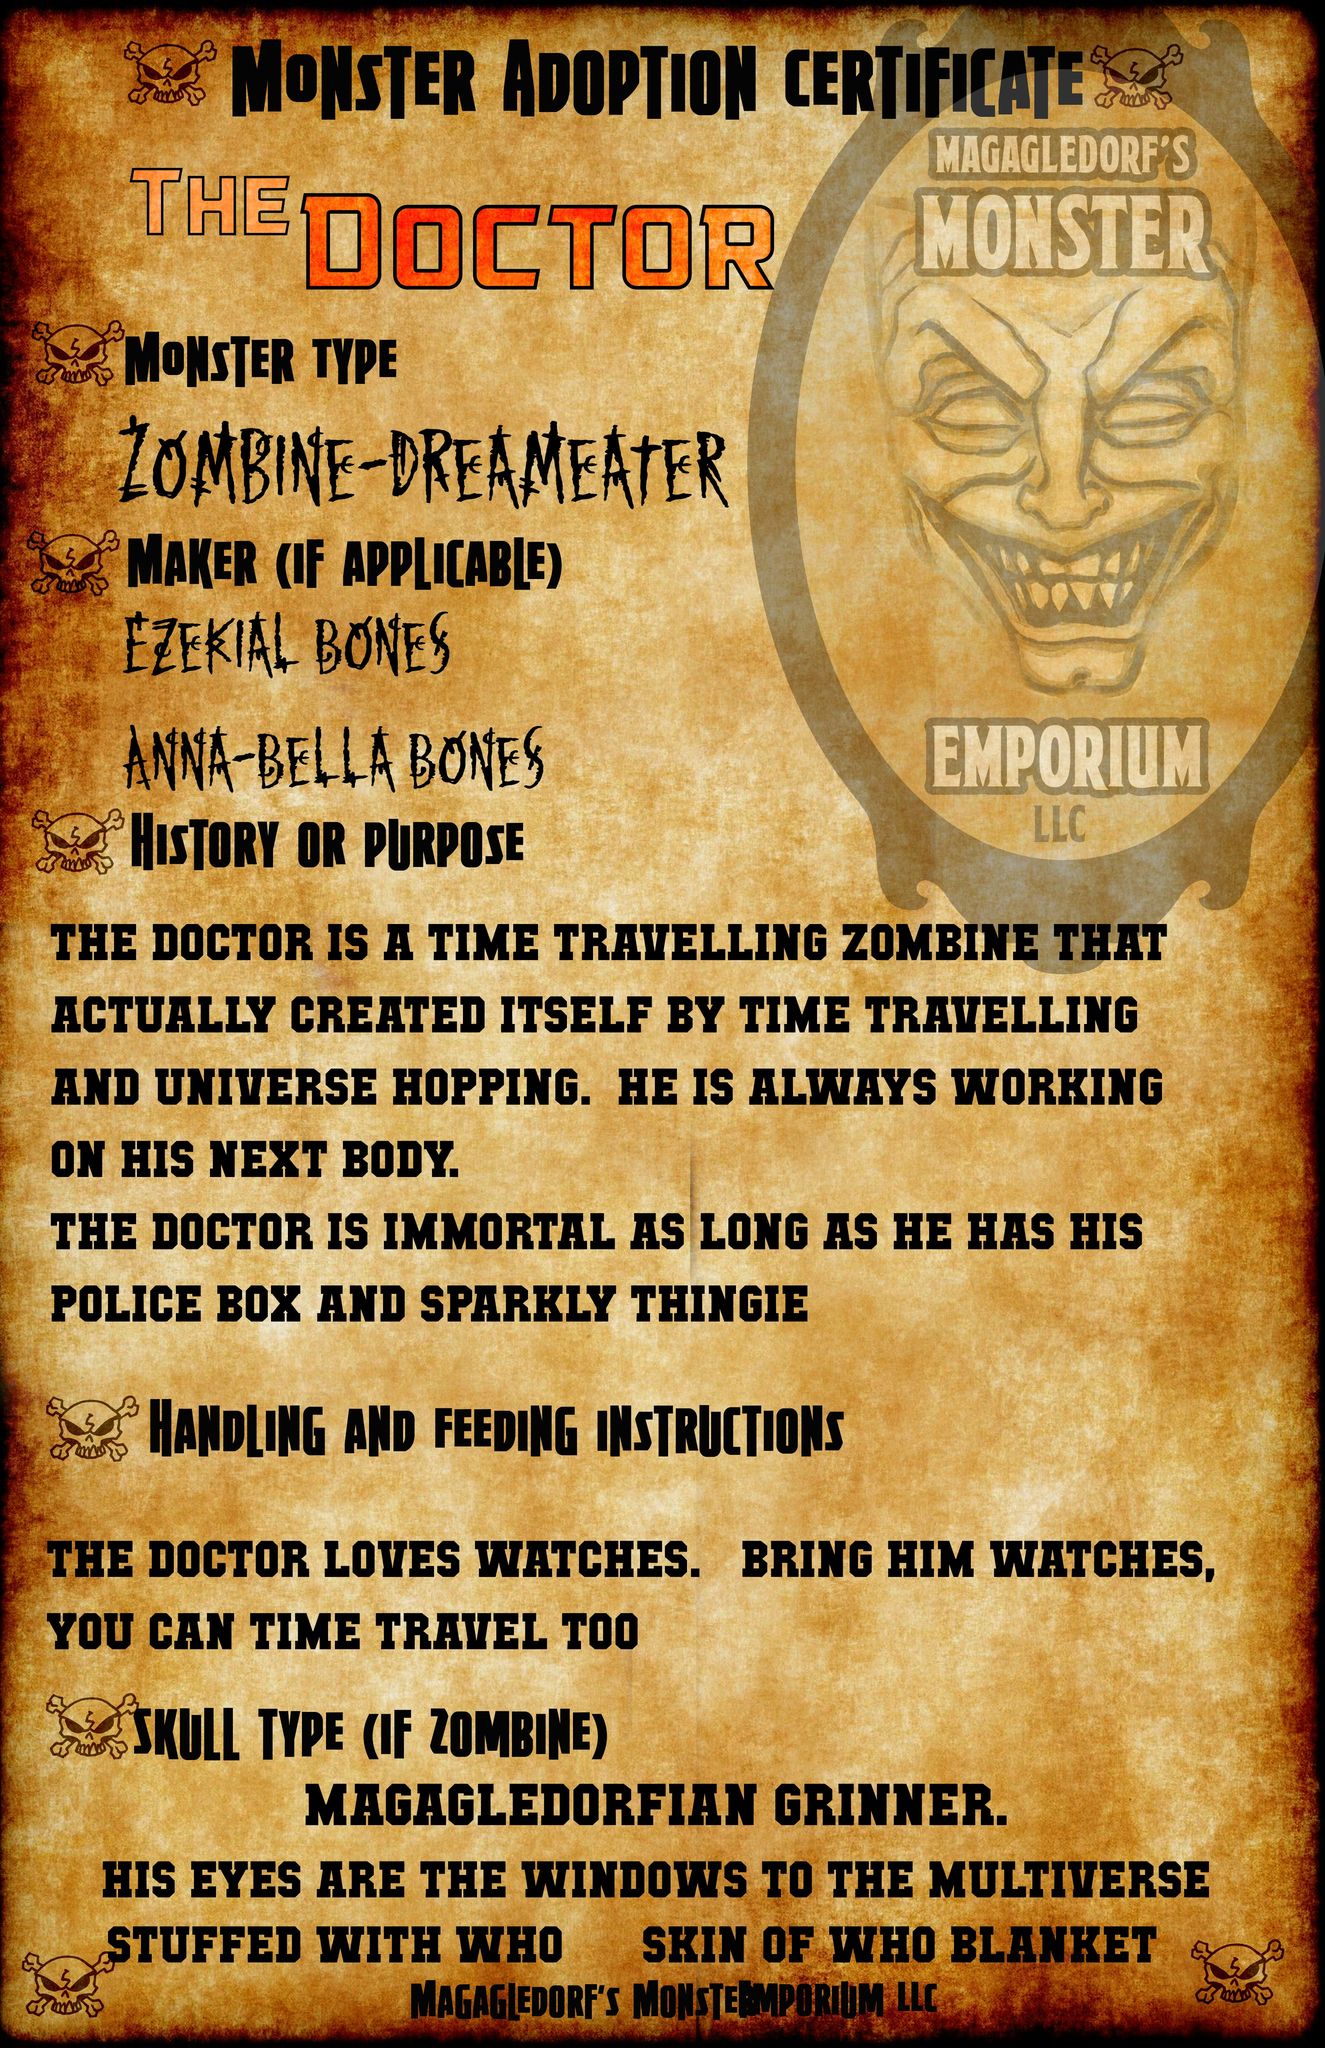 The Doctor Zombine